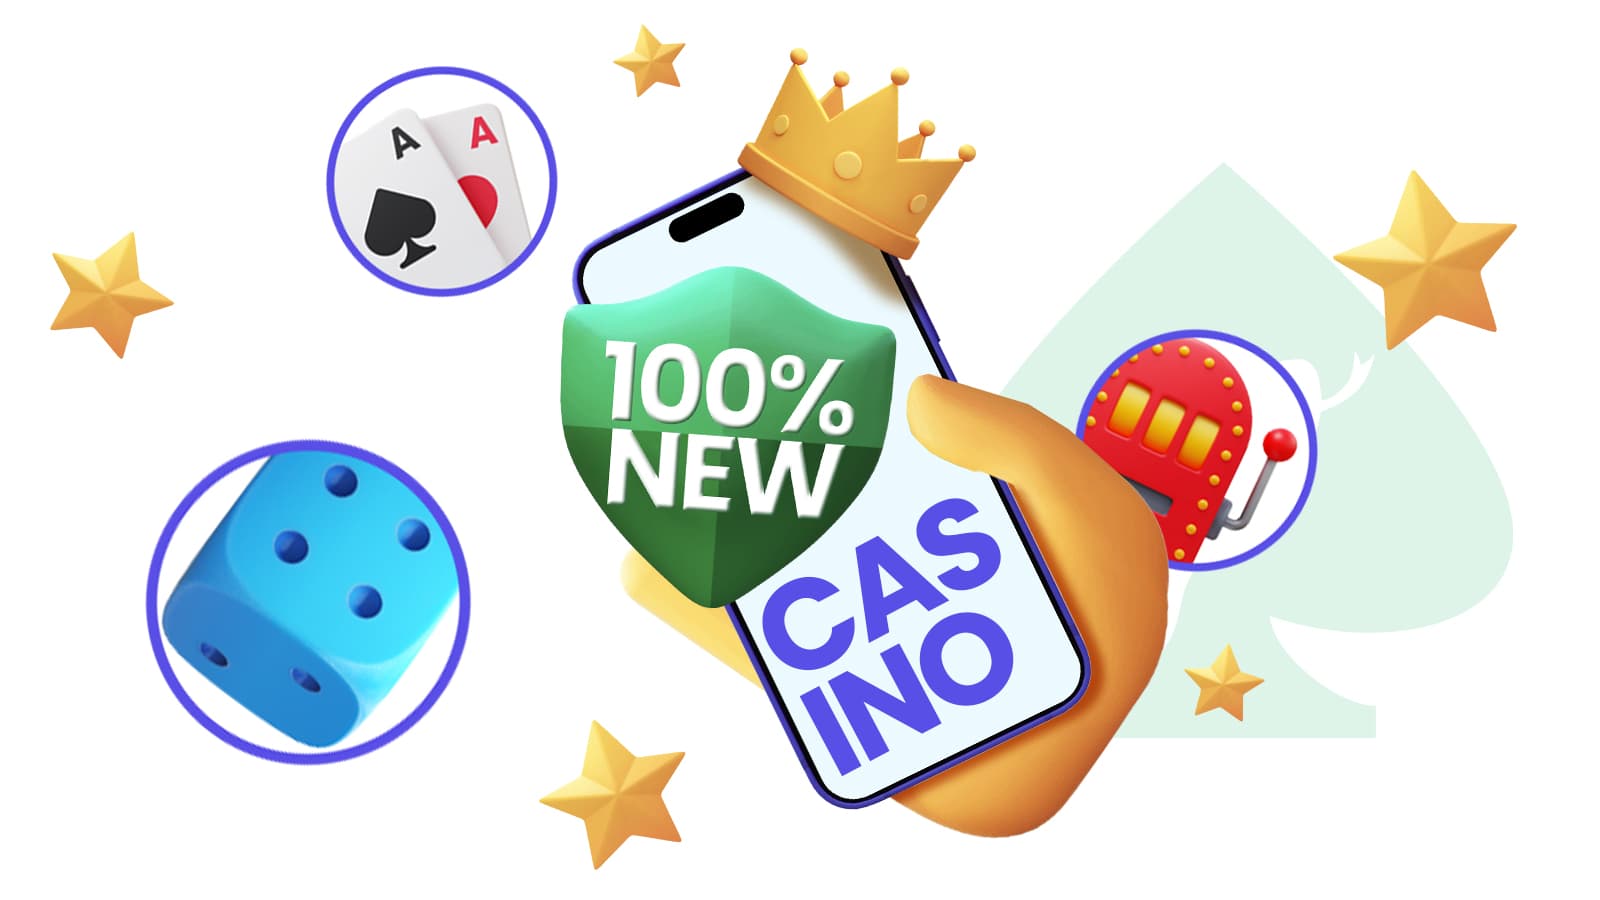 new online casino canada